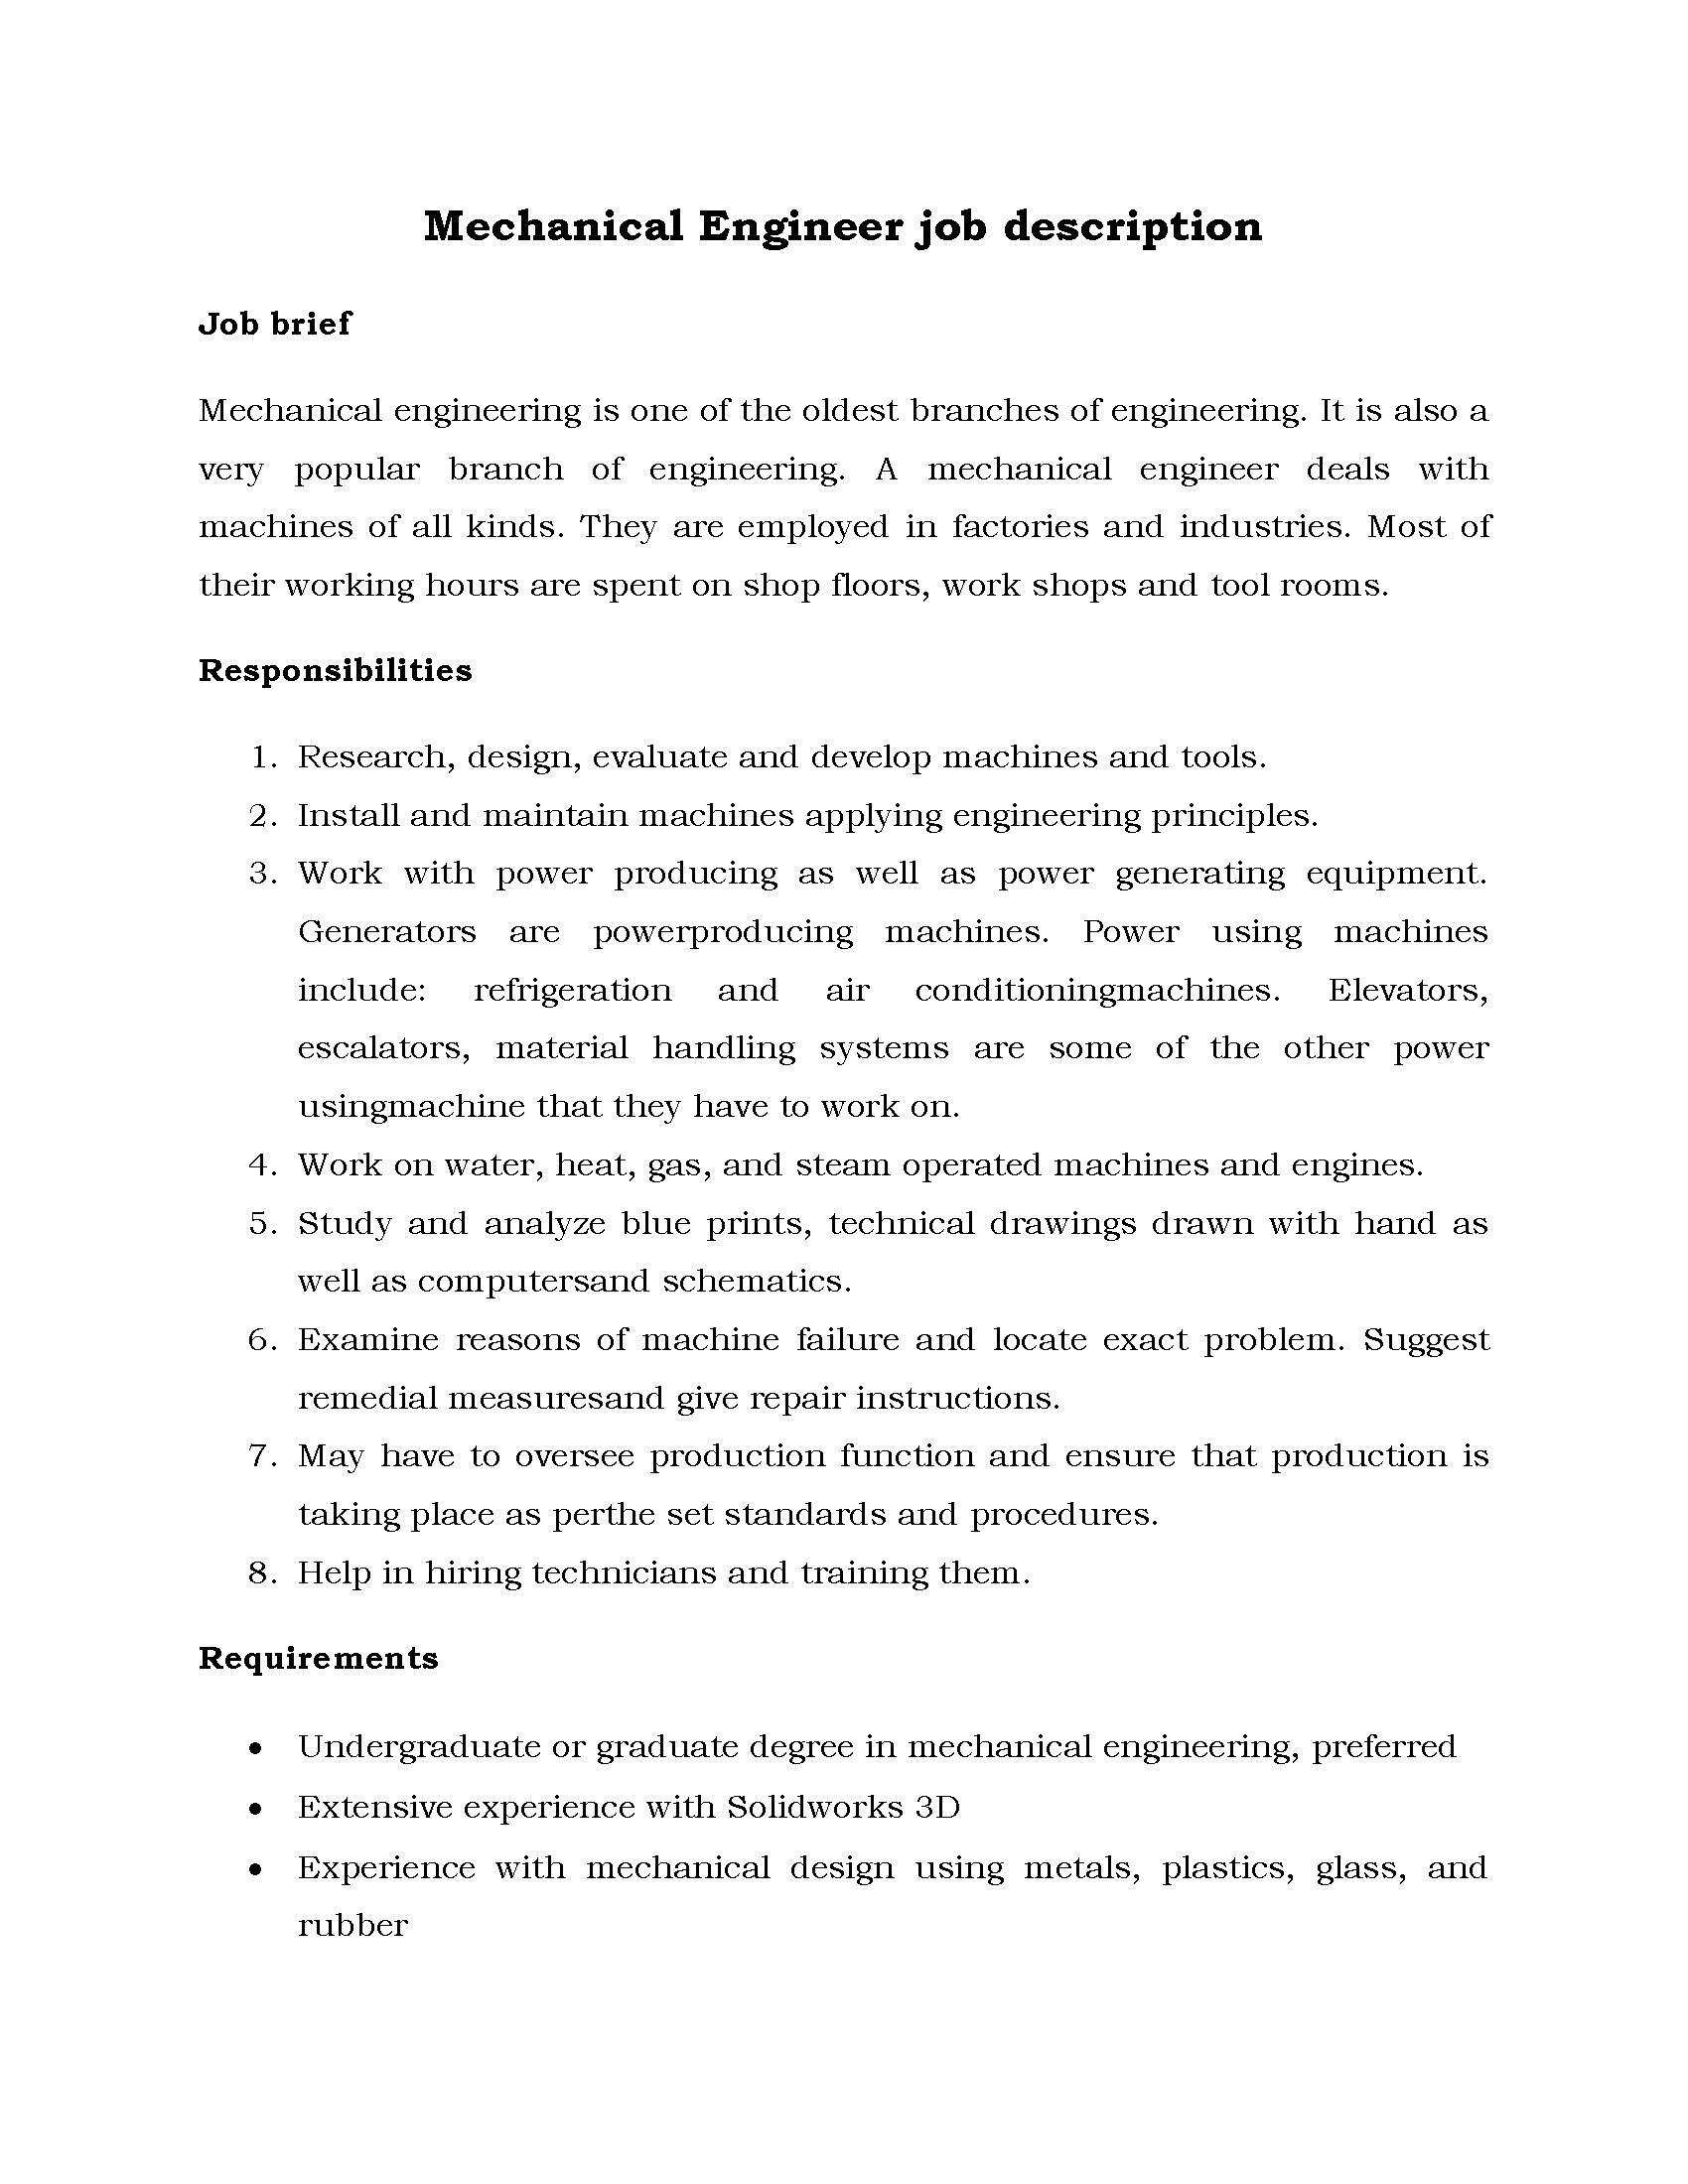 72-Mechanical Engineer job description (1)